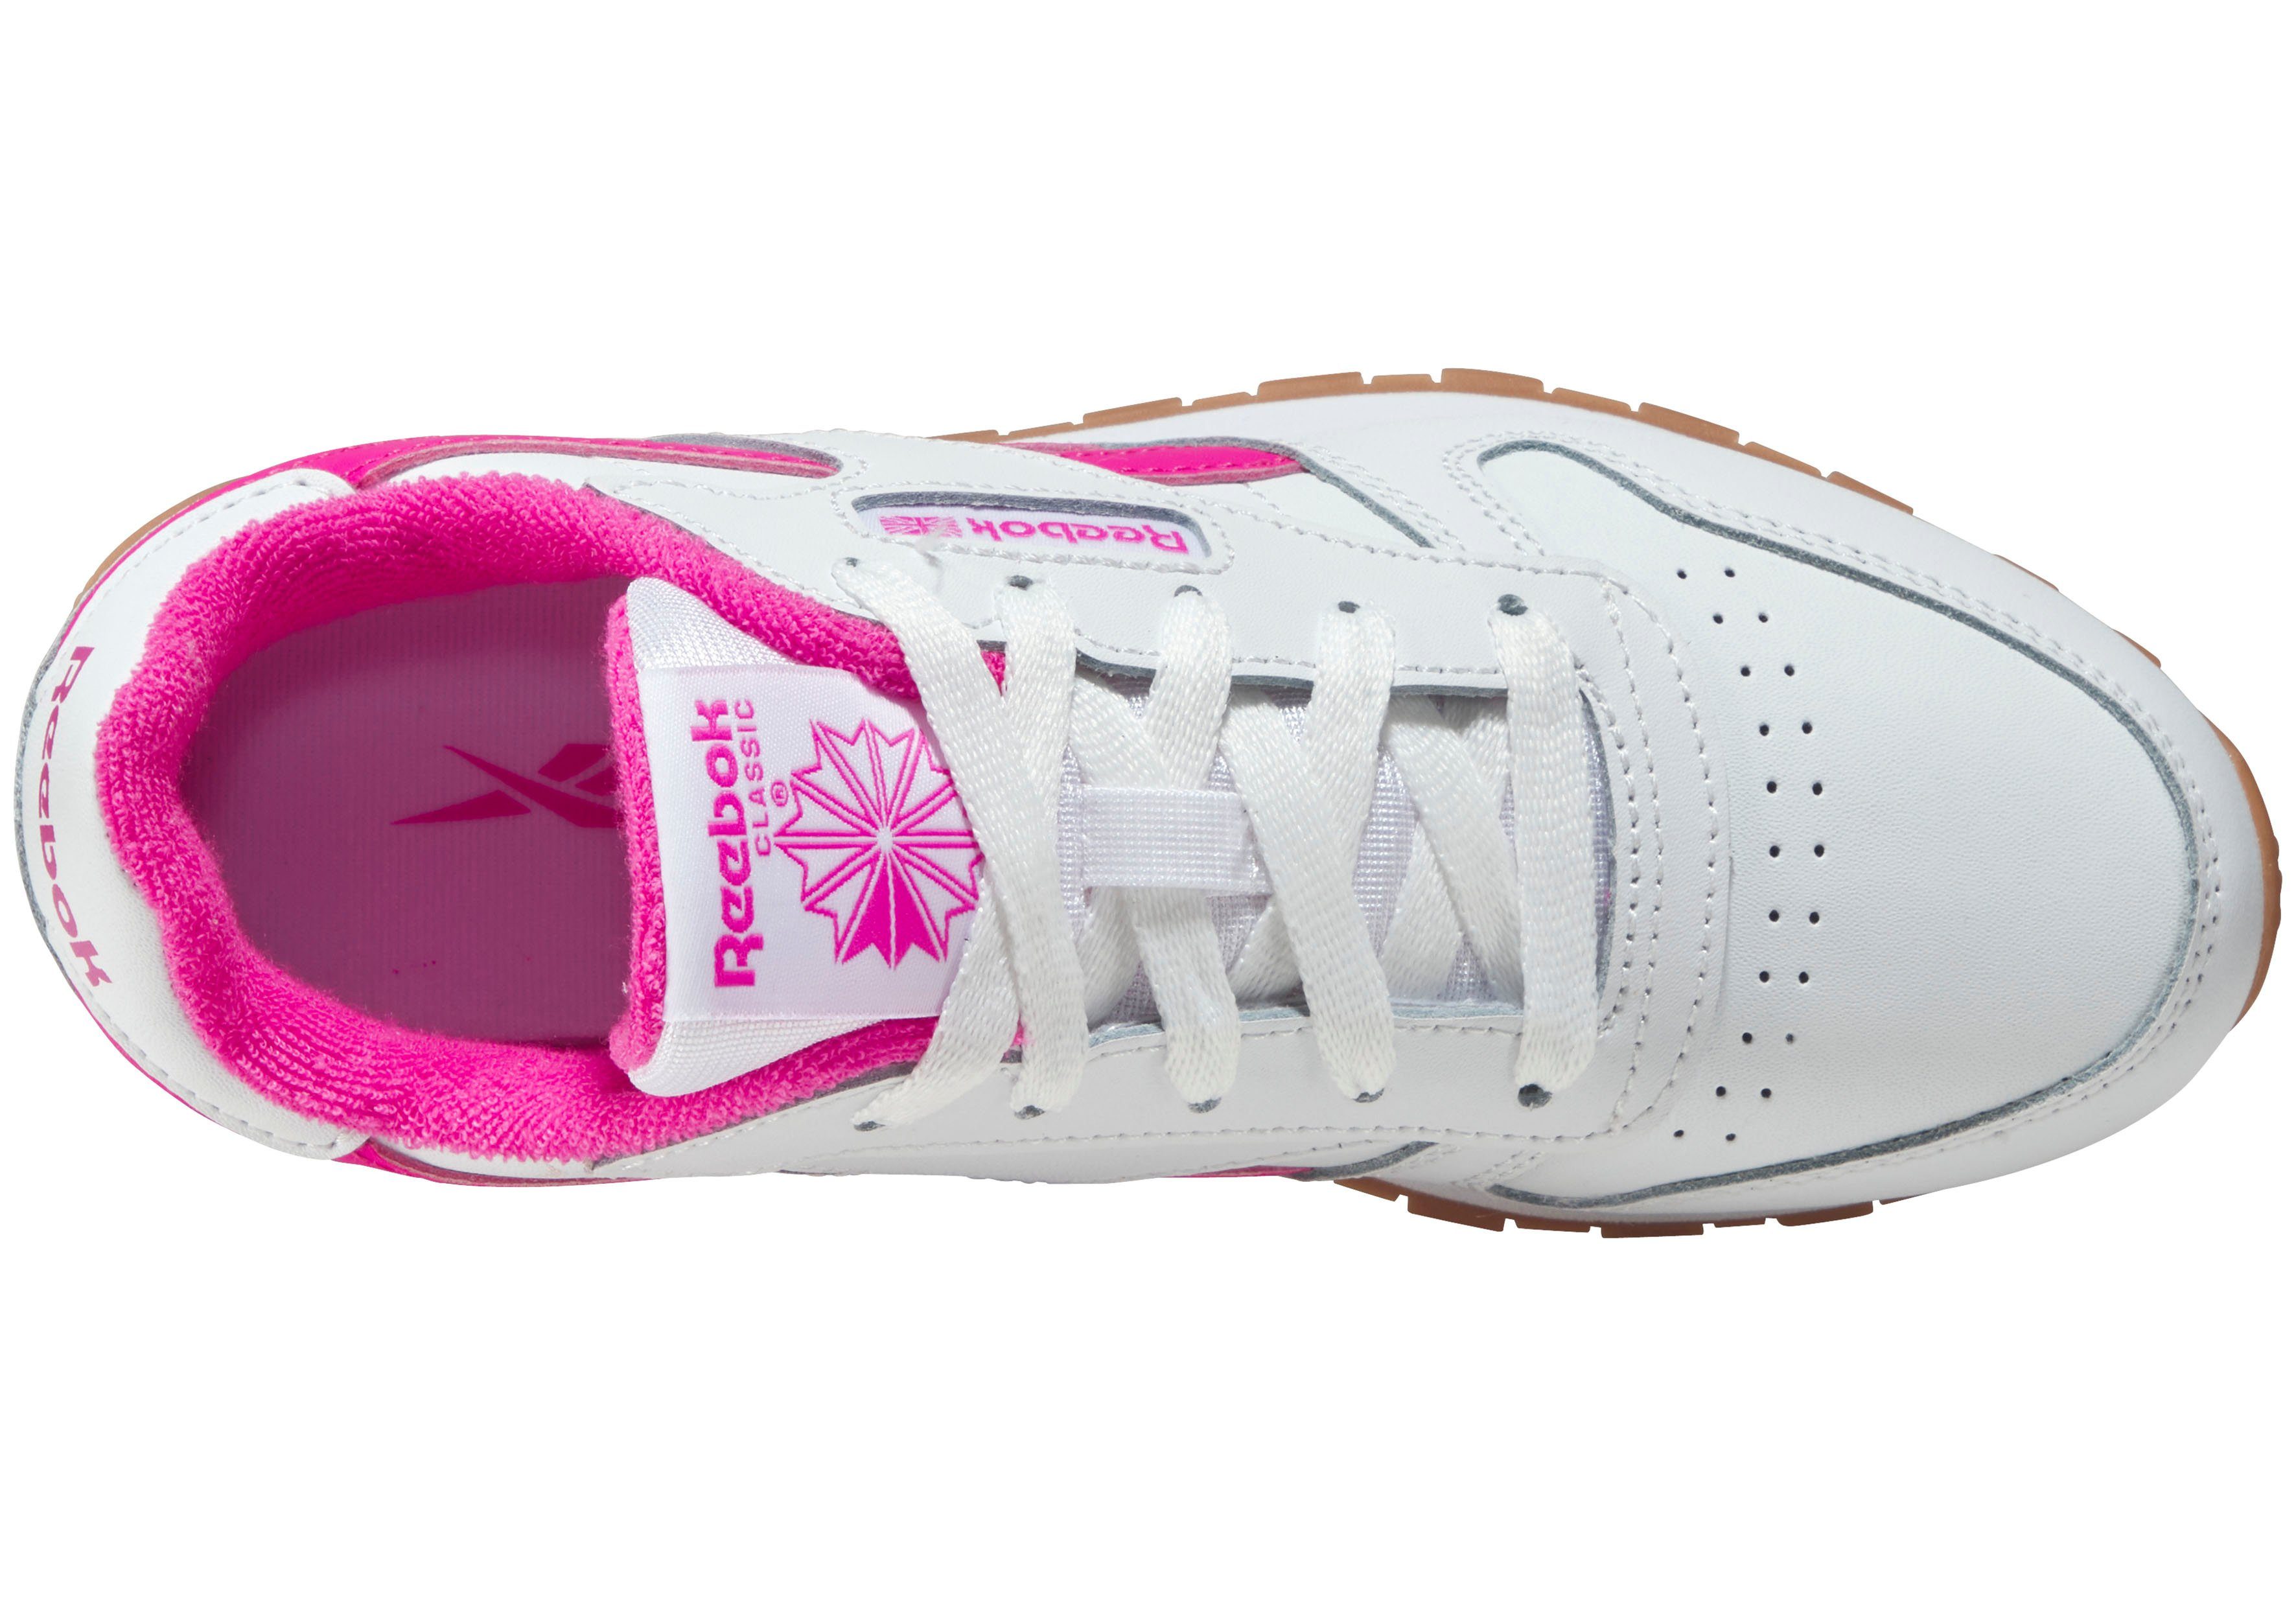 Sneaker CLASSIC Classic weiß-pink LEATHER Reebok